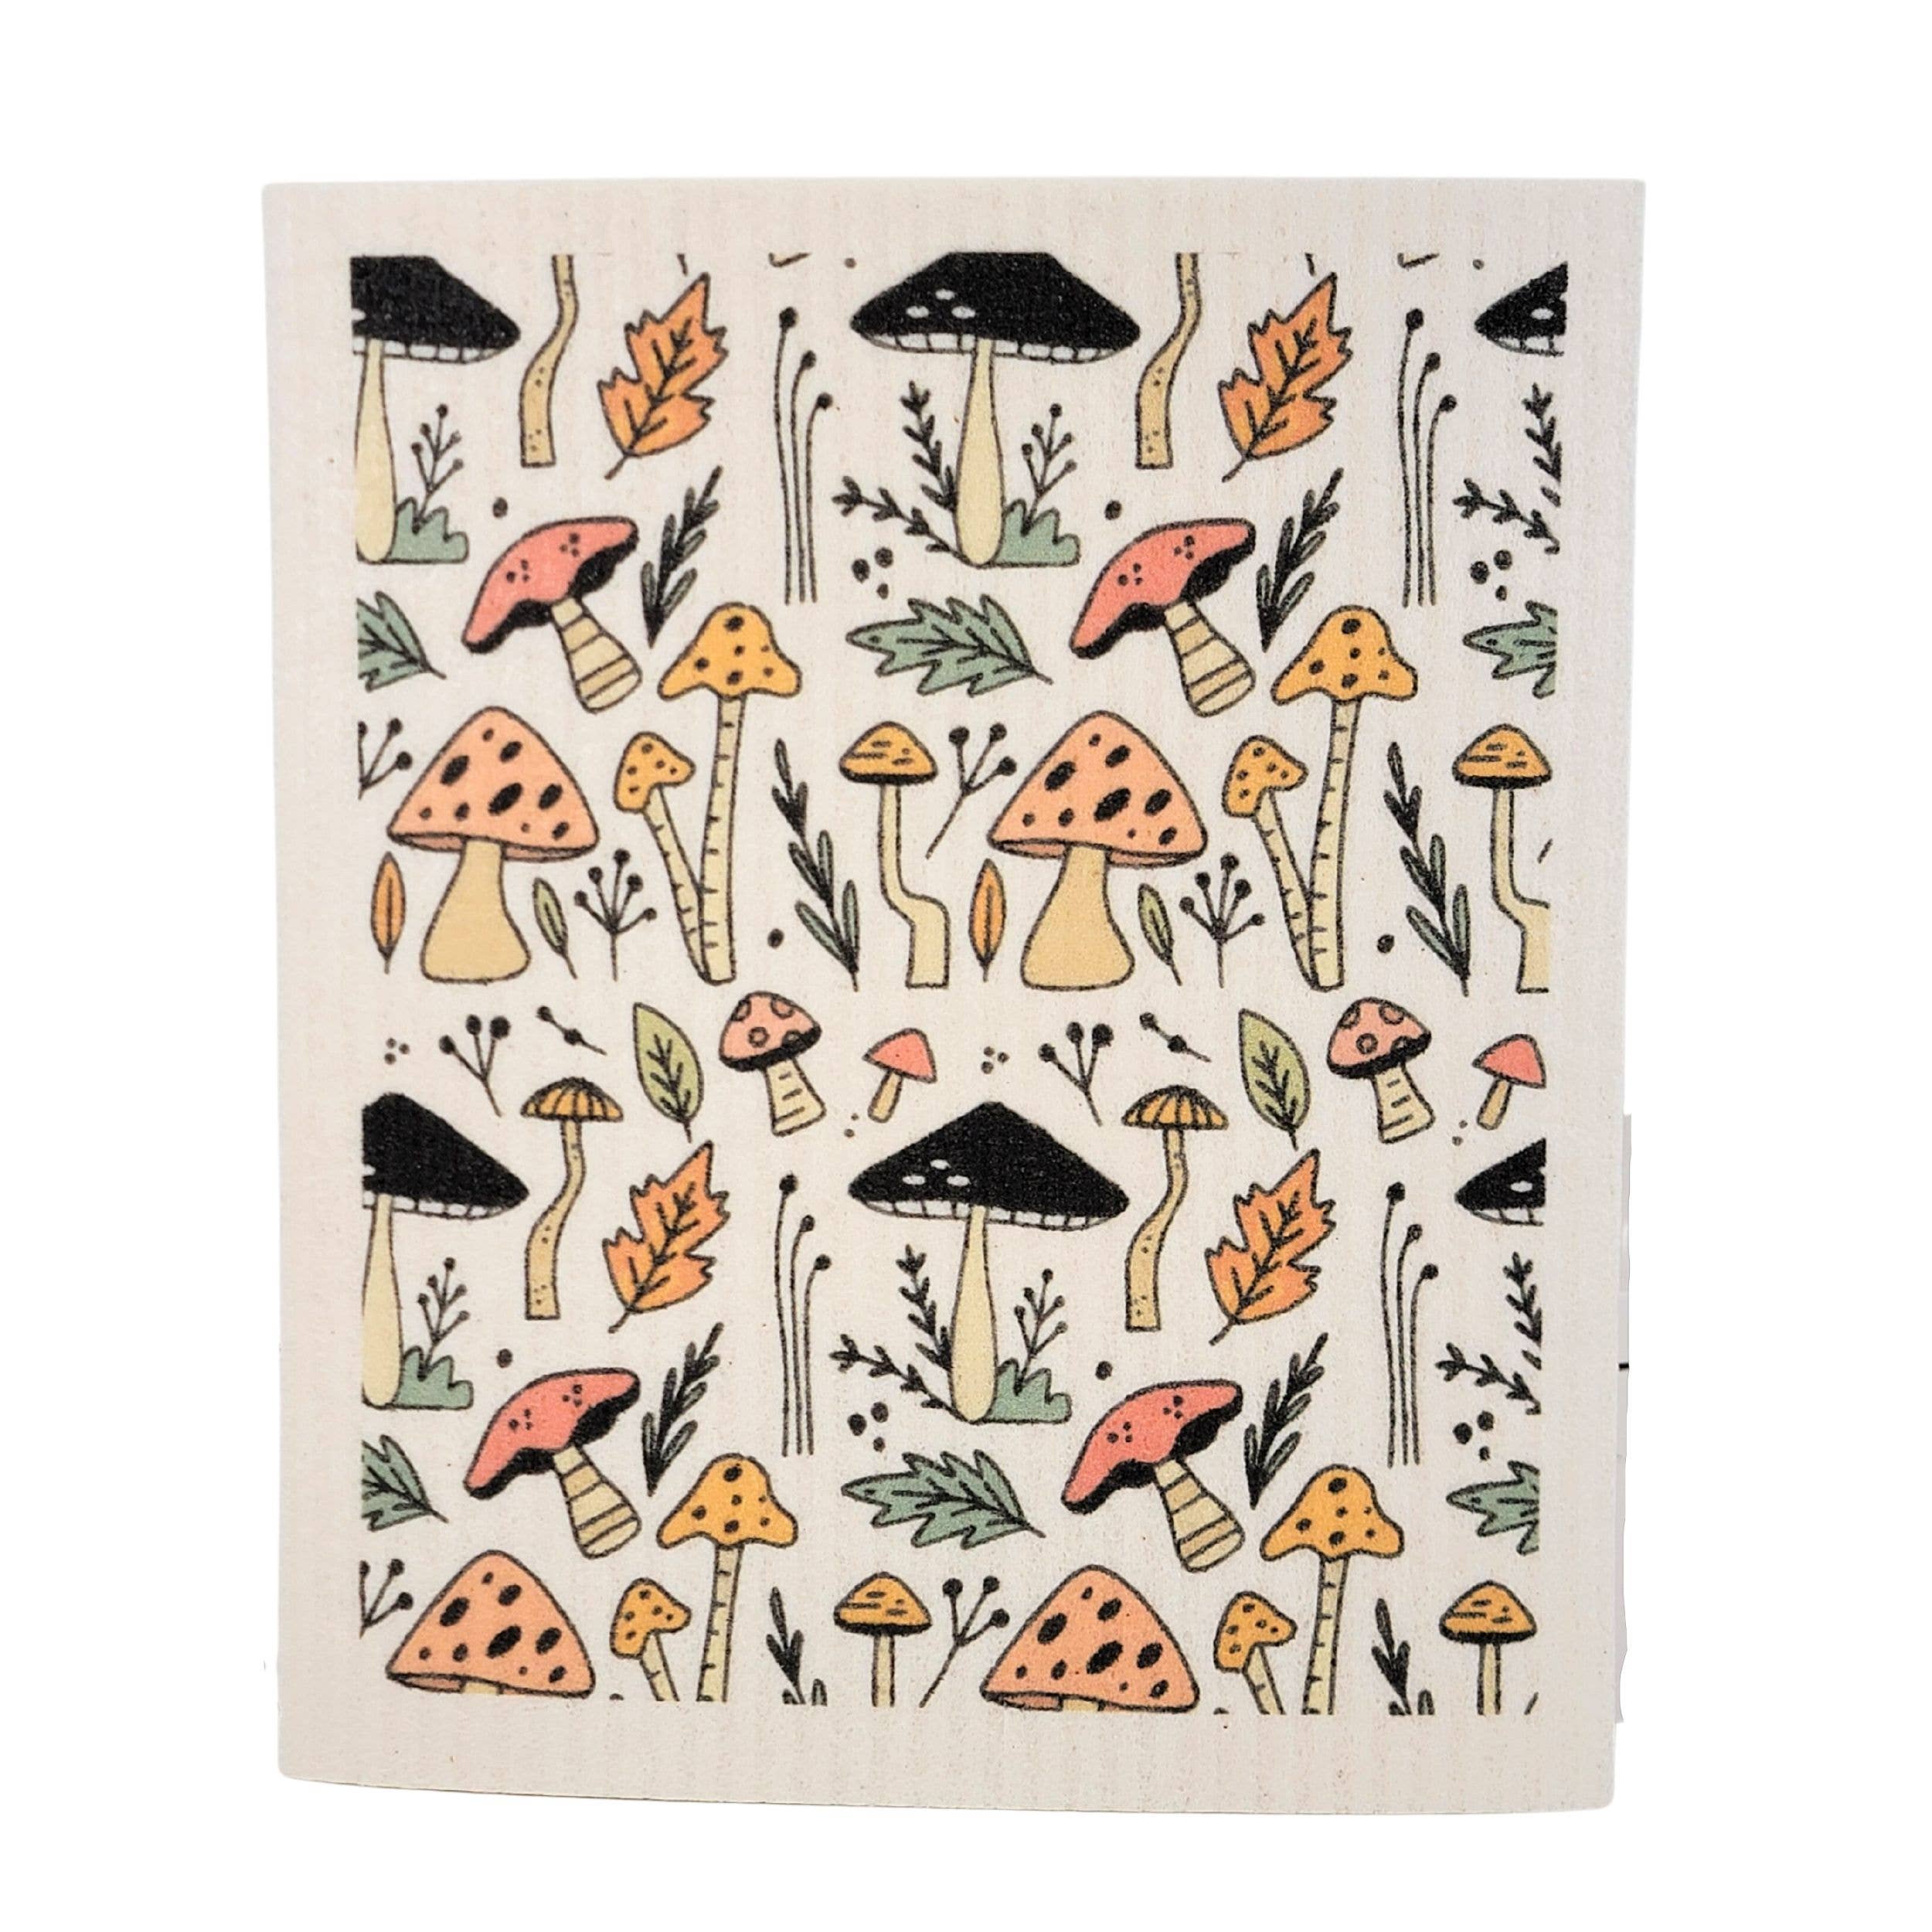 Driftless Studios - Summer Mushroom Pattern Swedish Dishcloths - Sponge cloth